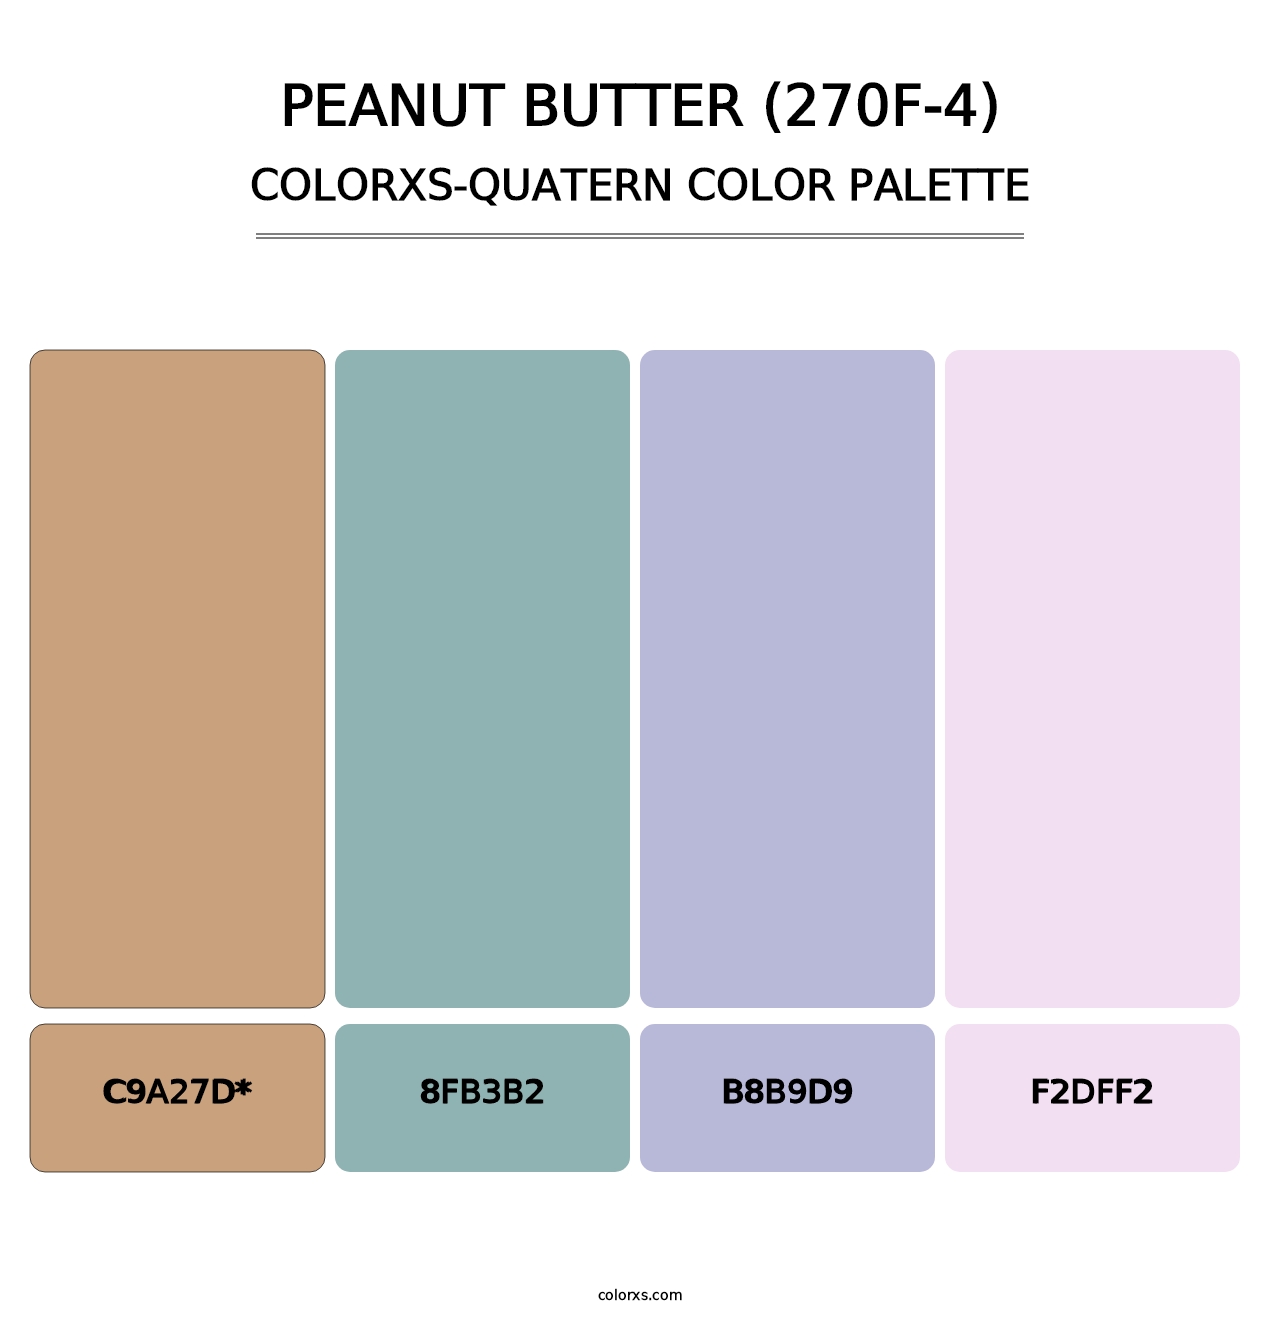 Peanut Butter (270F-4) - Colorxs Quatern Palette